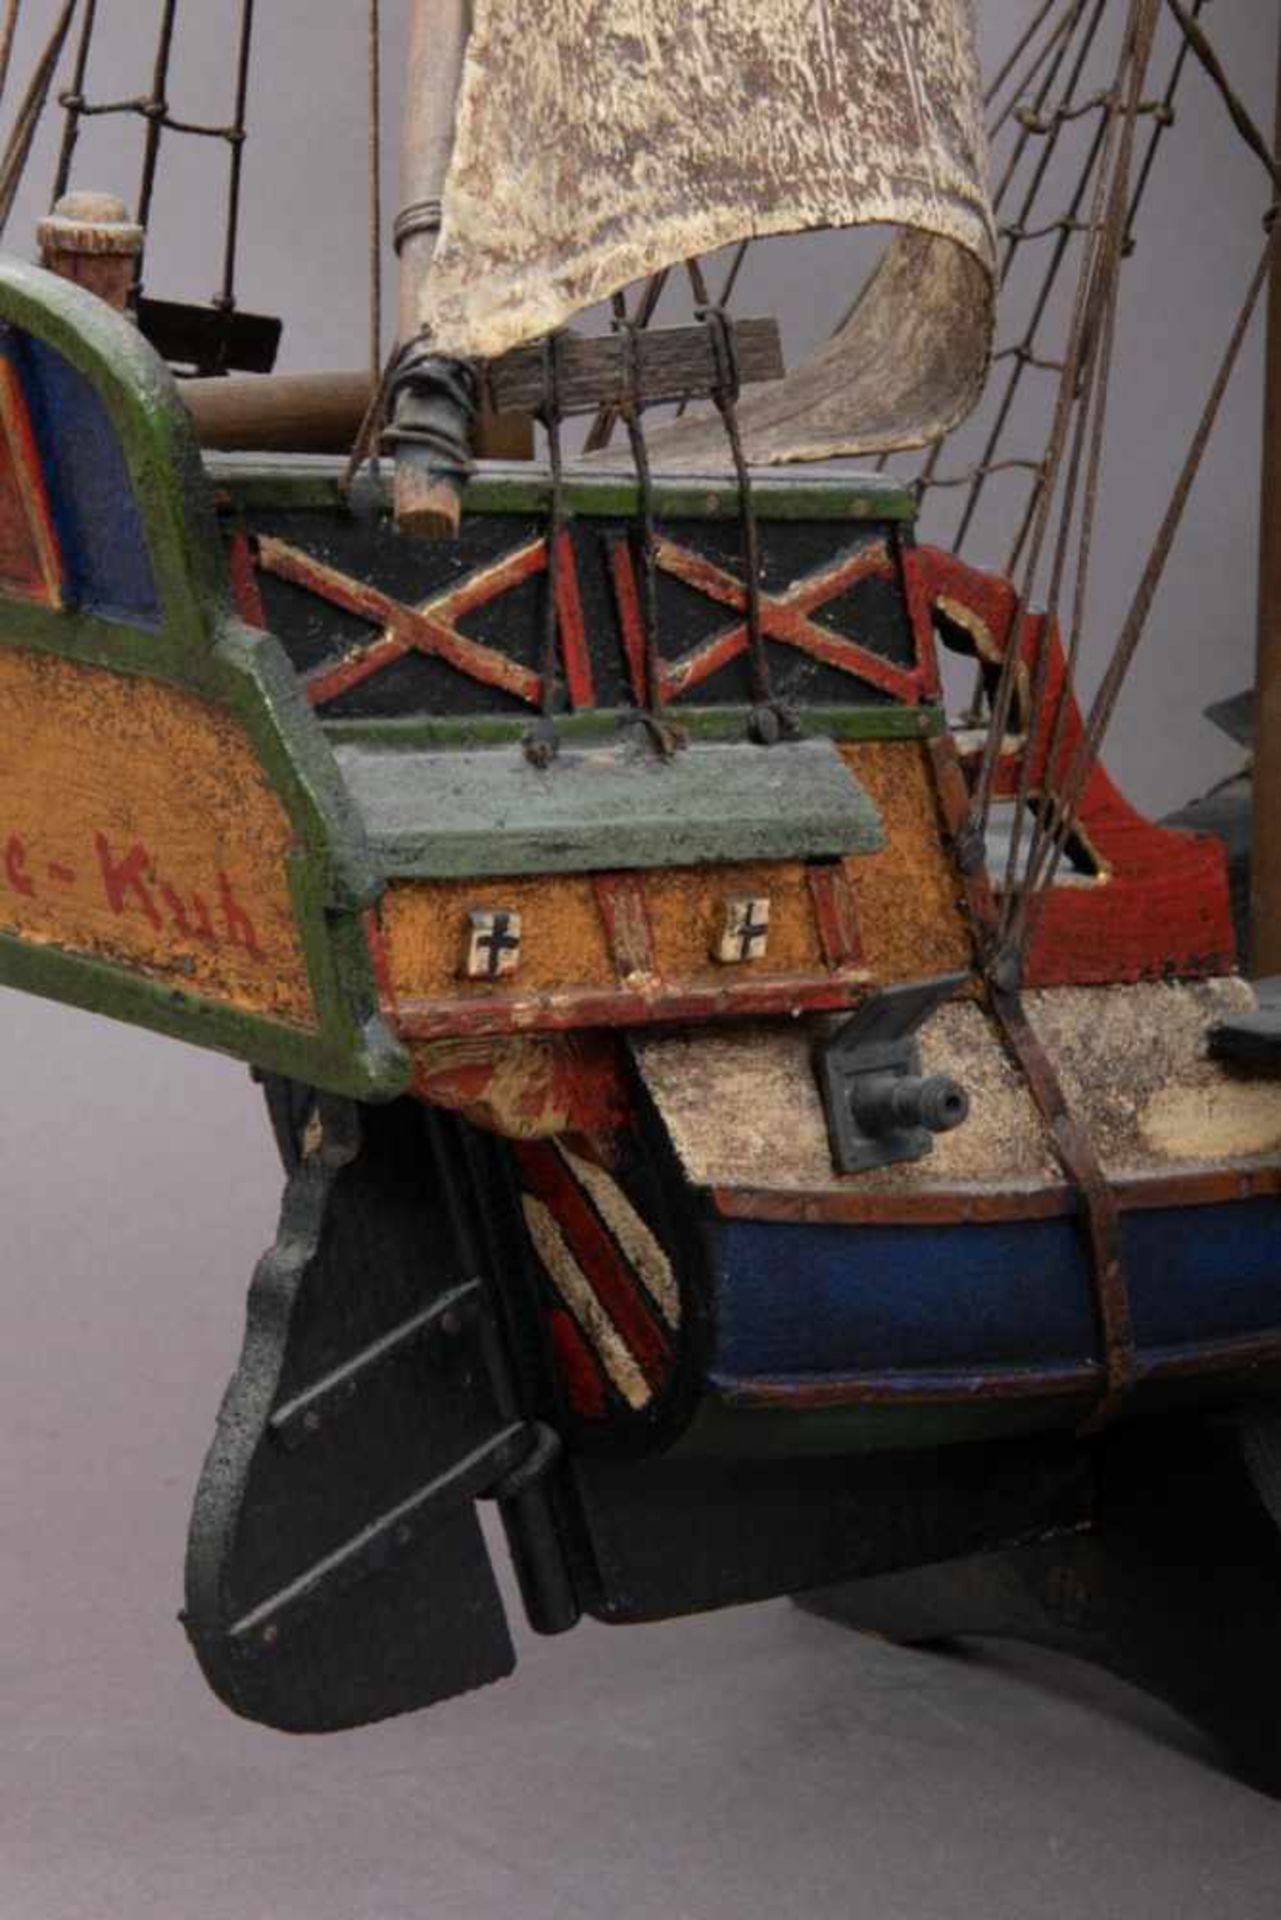 Modellschiff, 20. Jhd. Holz u. a. Materialien, Länge ca. 75 cm, leichte Alters- & Erhaltungsmängel. - Bild 9 aus 12